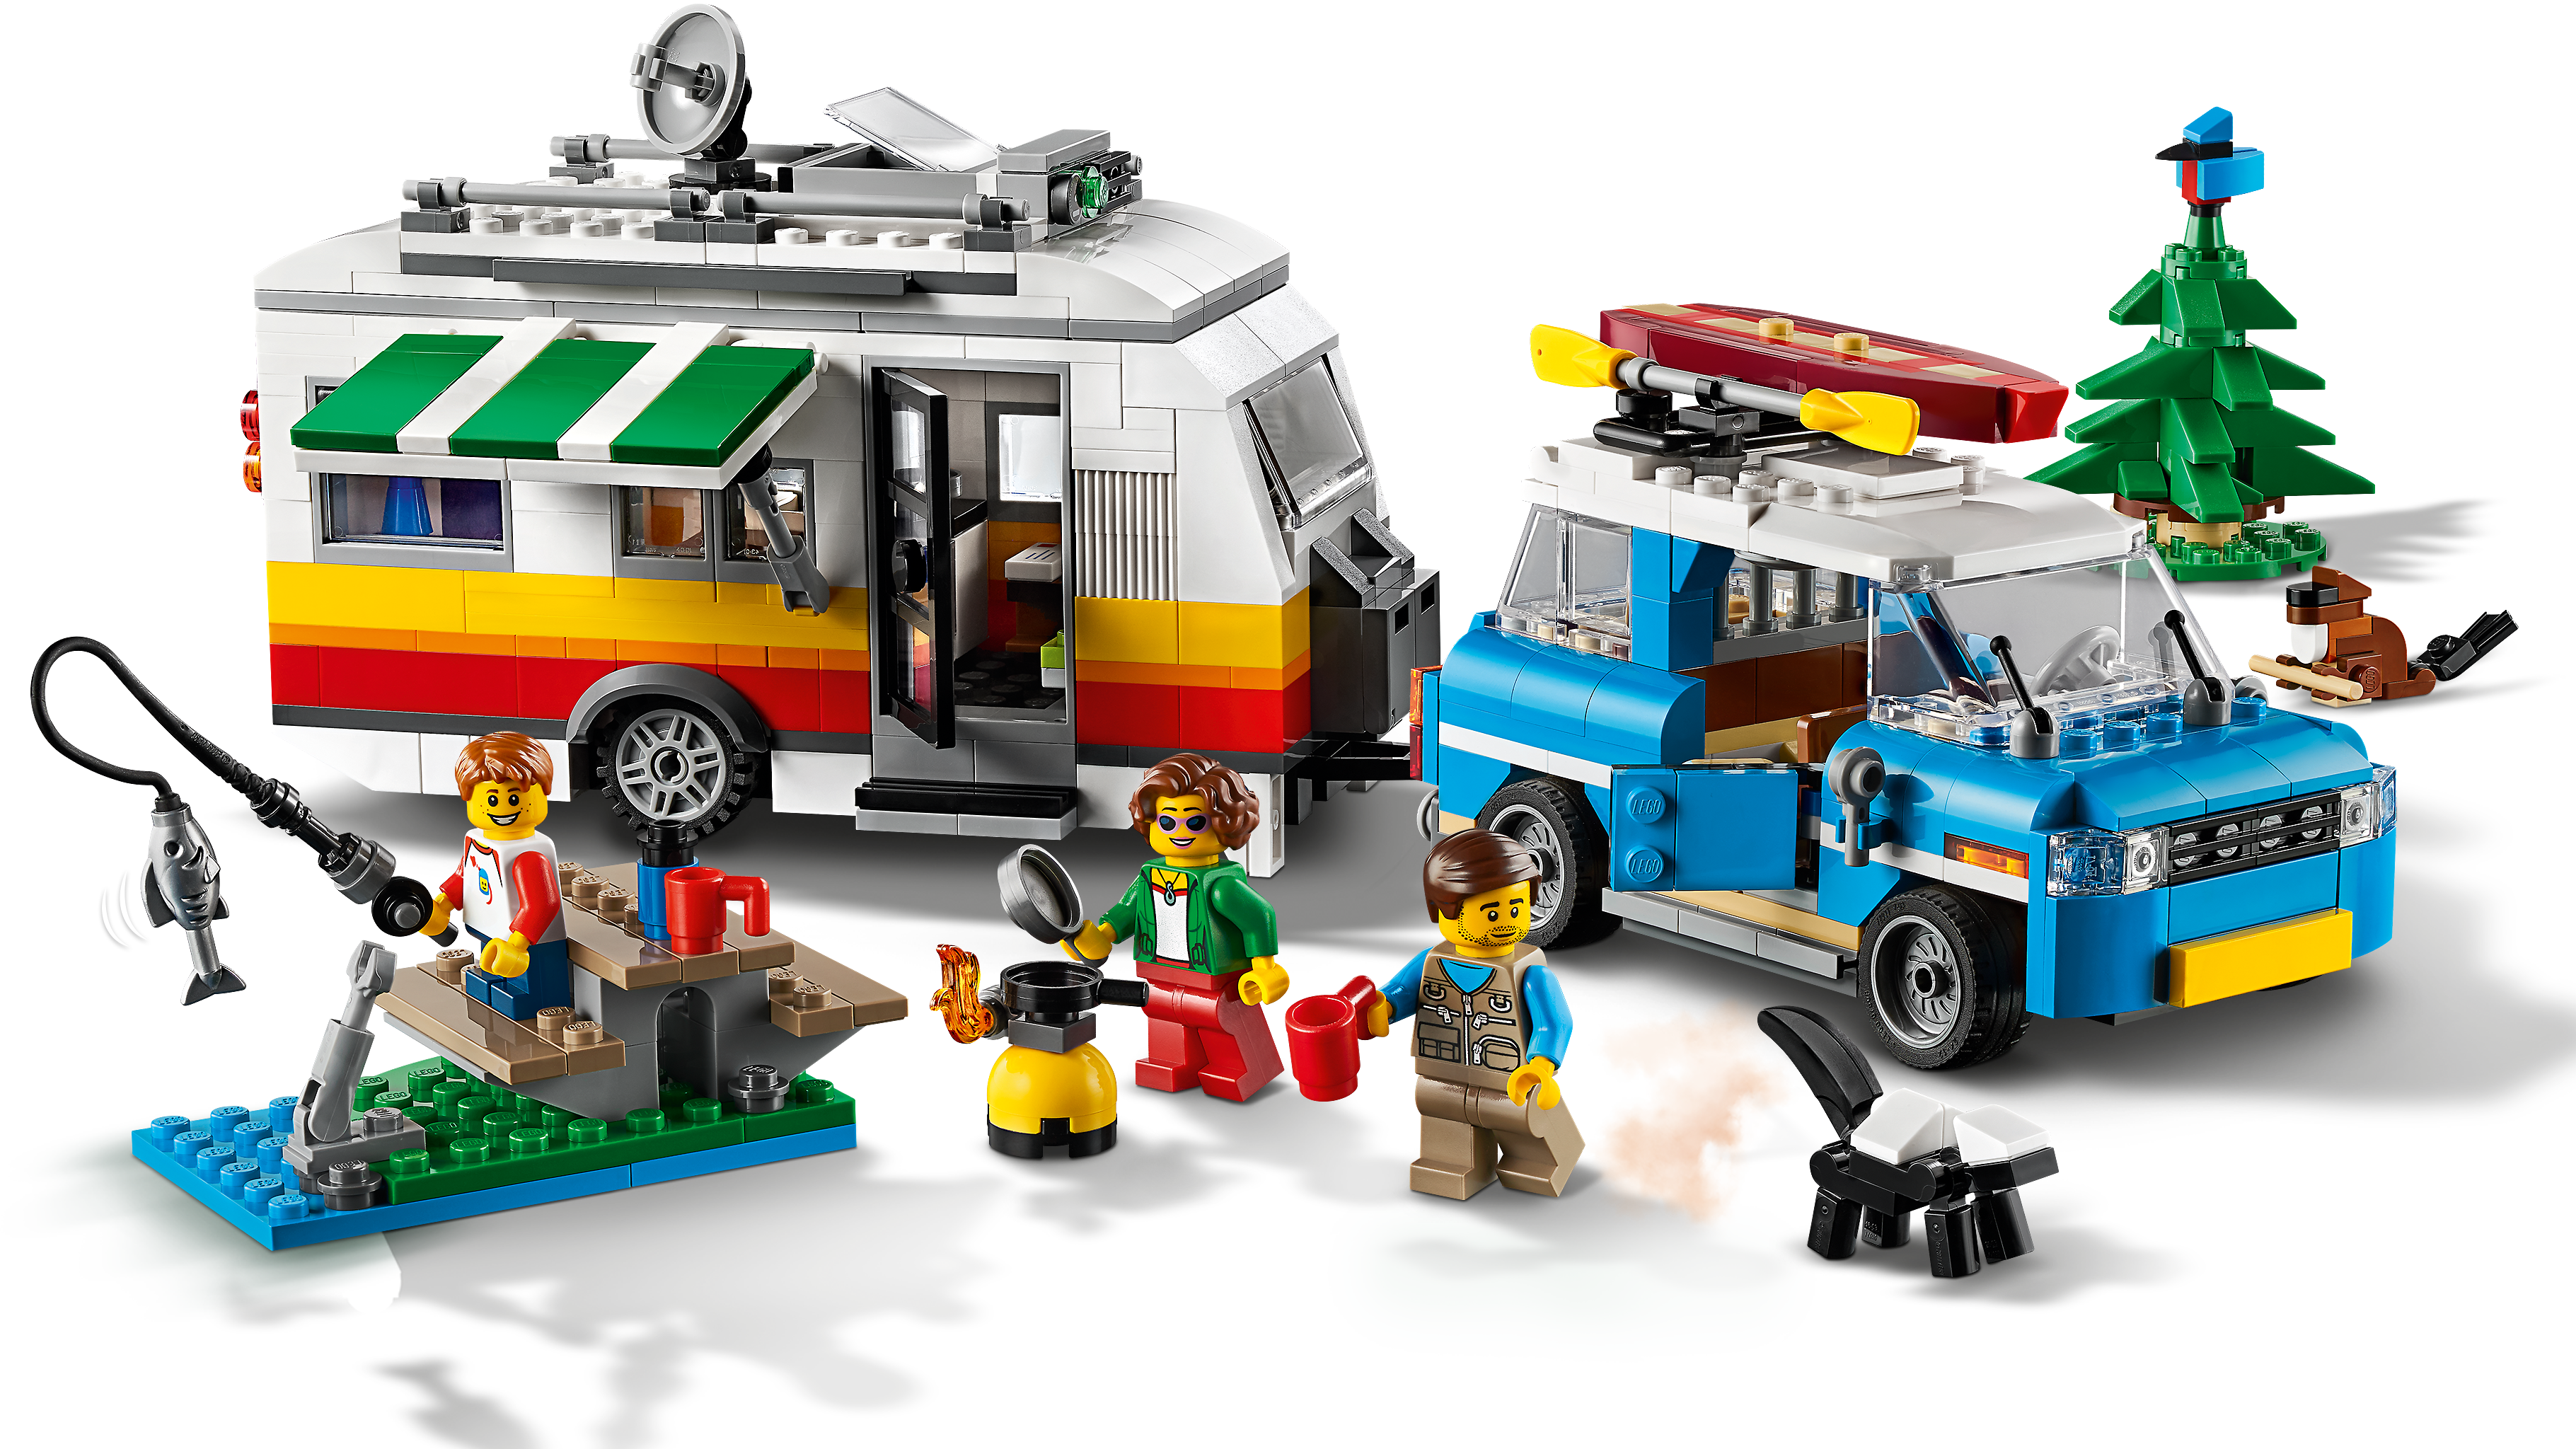 LEGO Creator: Caravan Family Holiday 31108 NIB